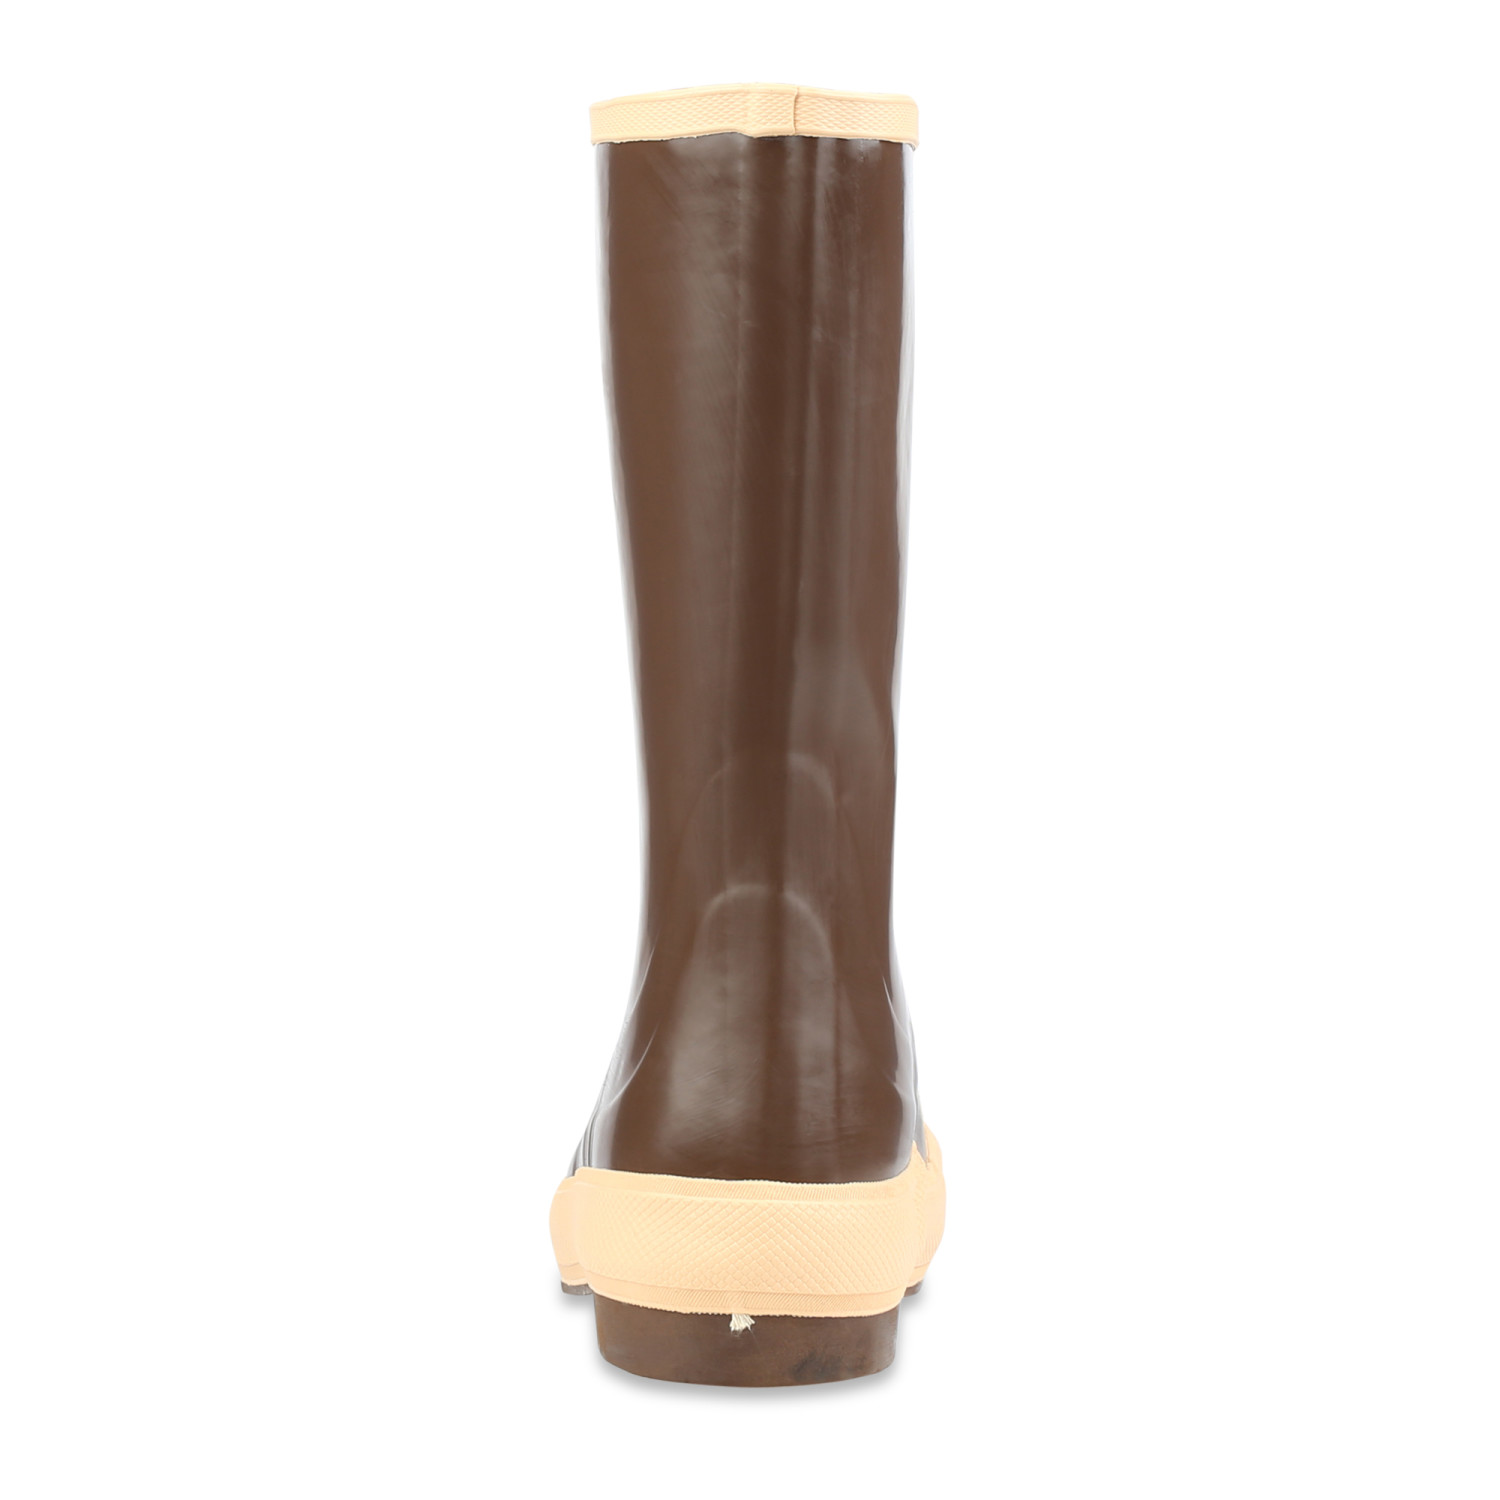 Servus 12 in Steel Toe Neoprene Safety Boot Size 12(M) - image 4 of 6